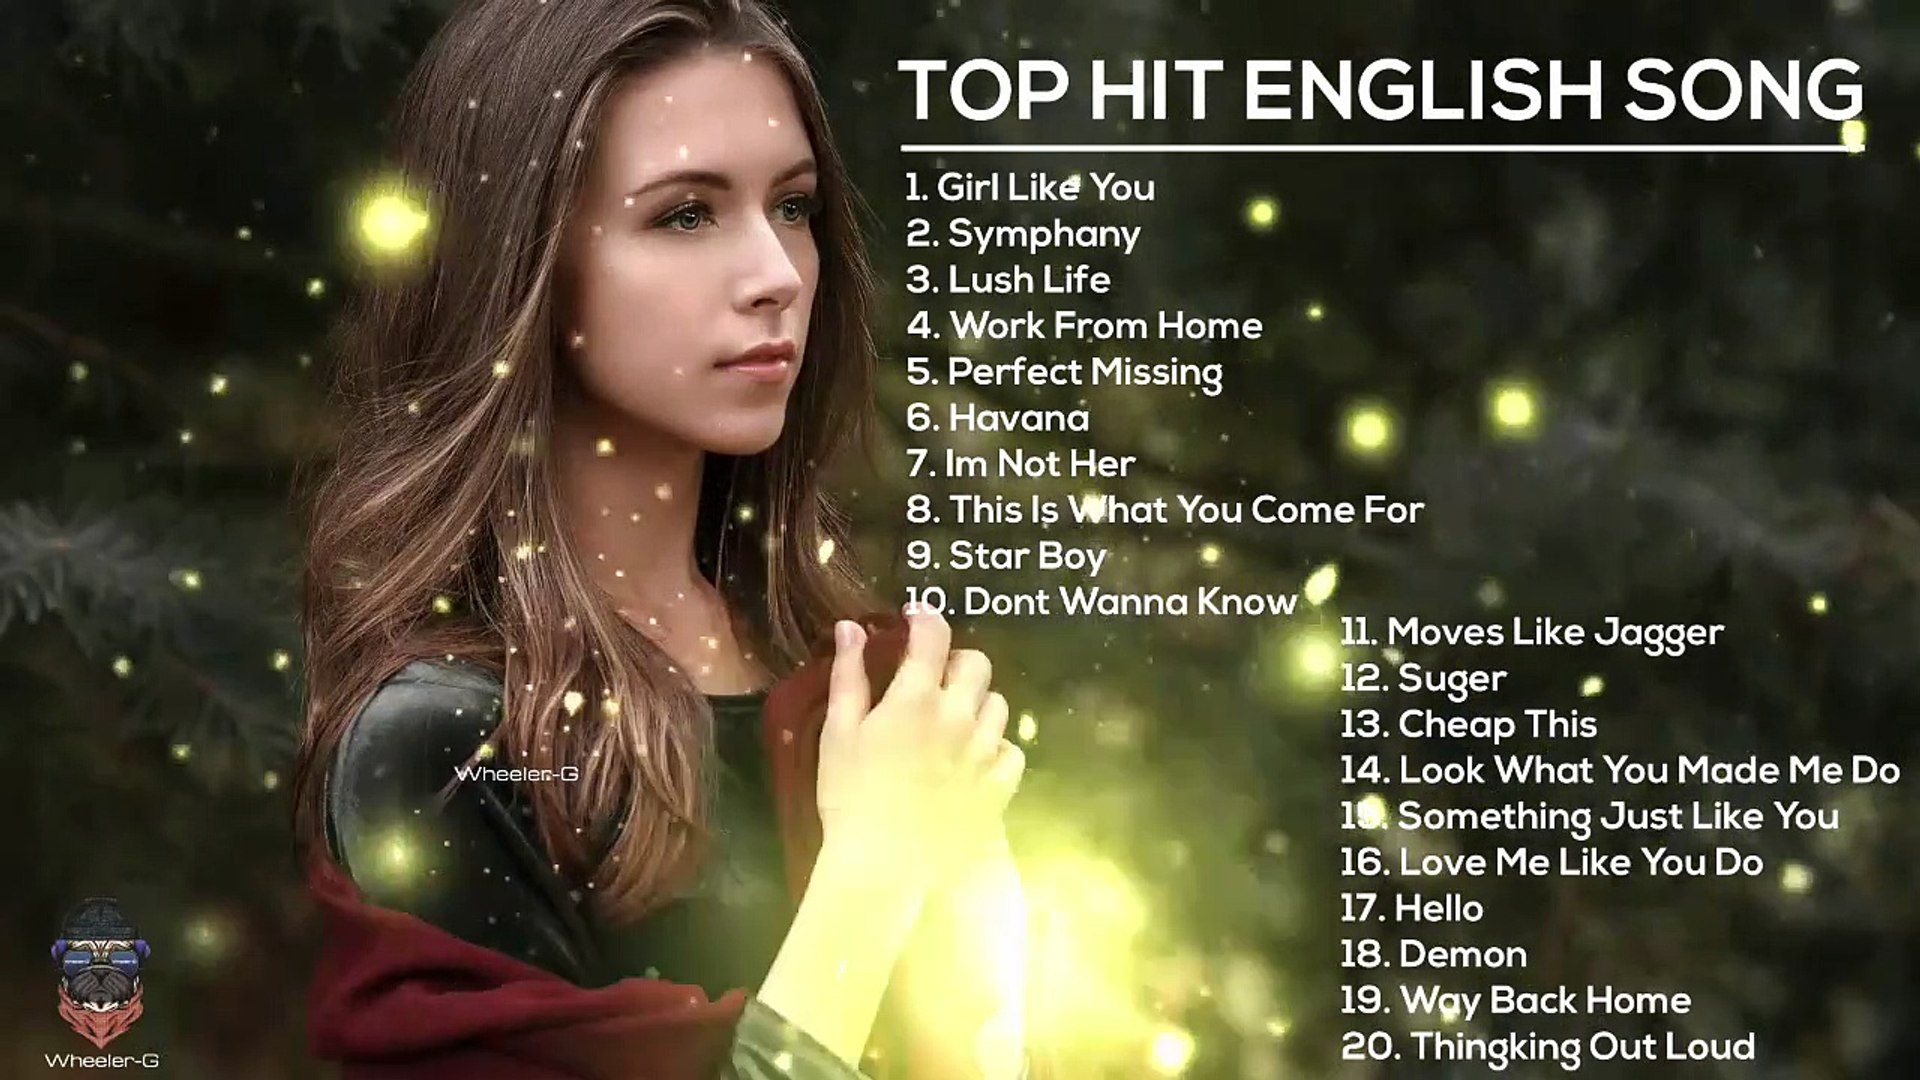 Best English Songs 2020 - Top 20 Pop Songs 2020 - Best Hits Music Playlist - [Wheeler-G]